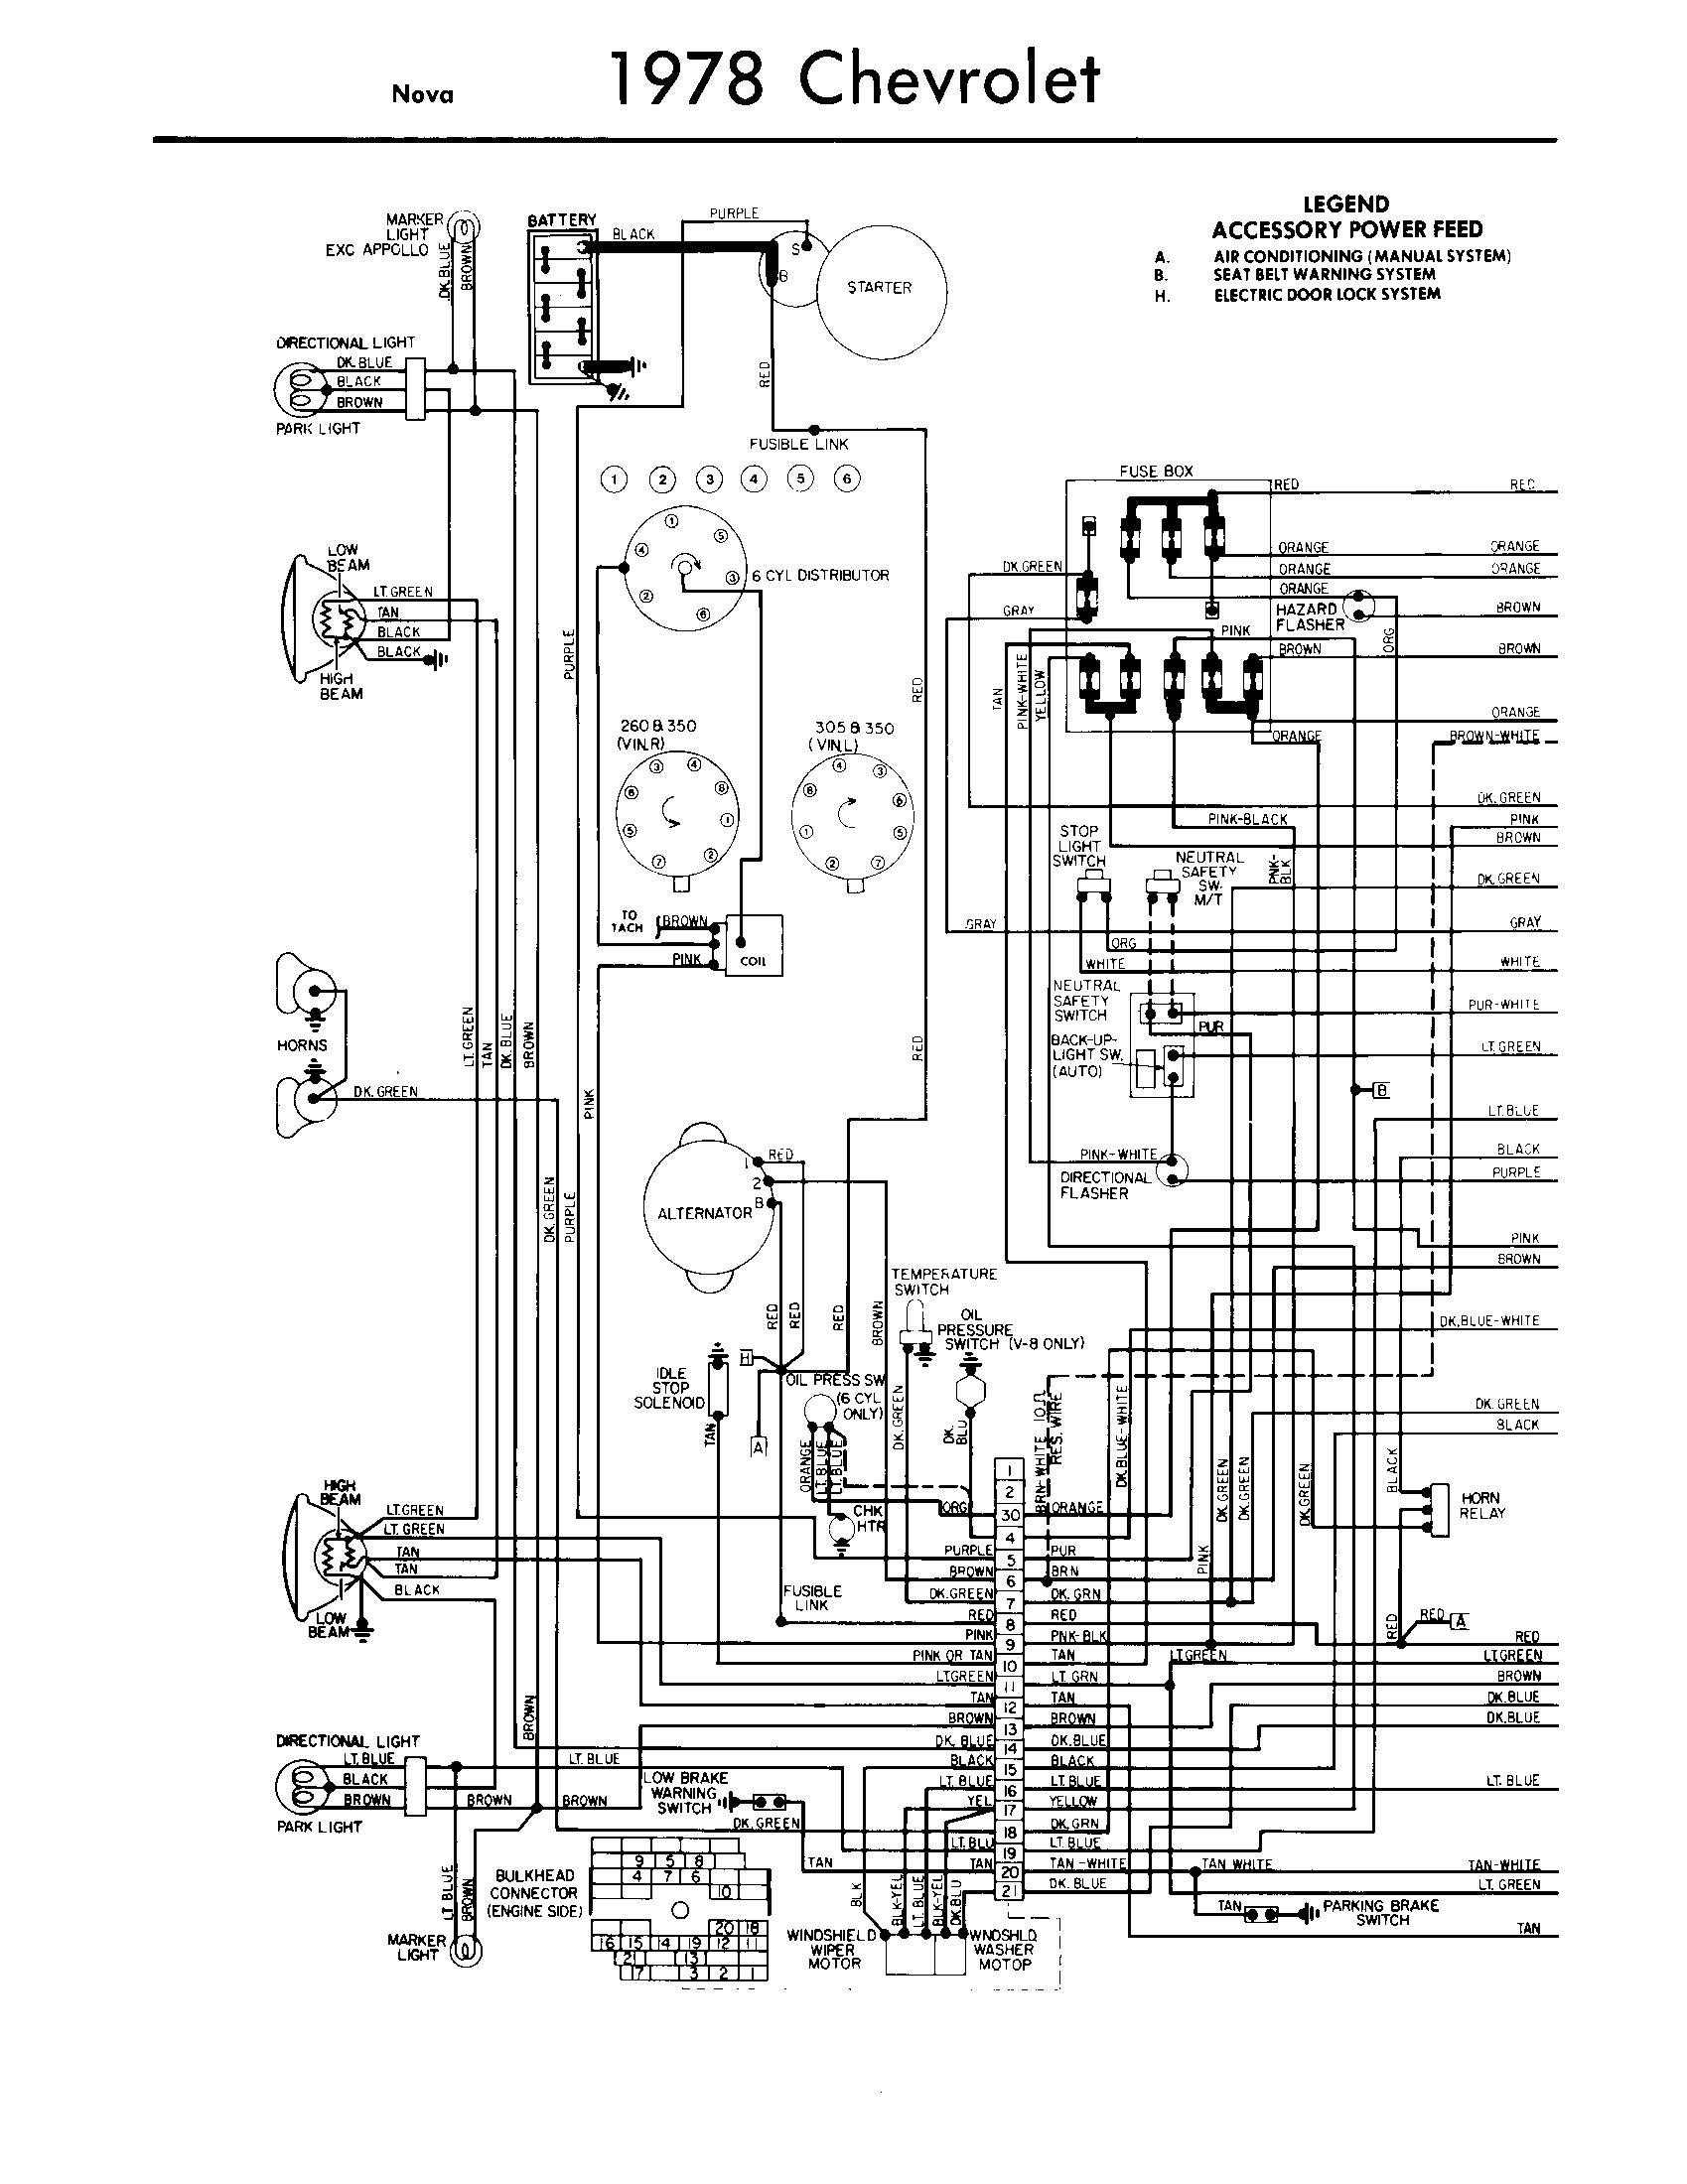 1977 Chevy Truck Vacuum Diagram 1973 Camaro Ac Wiring Diagram Another Blog About Wiring Diagram • Of 1977 Chevy Truck Vacuum Diagram